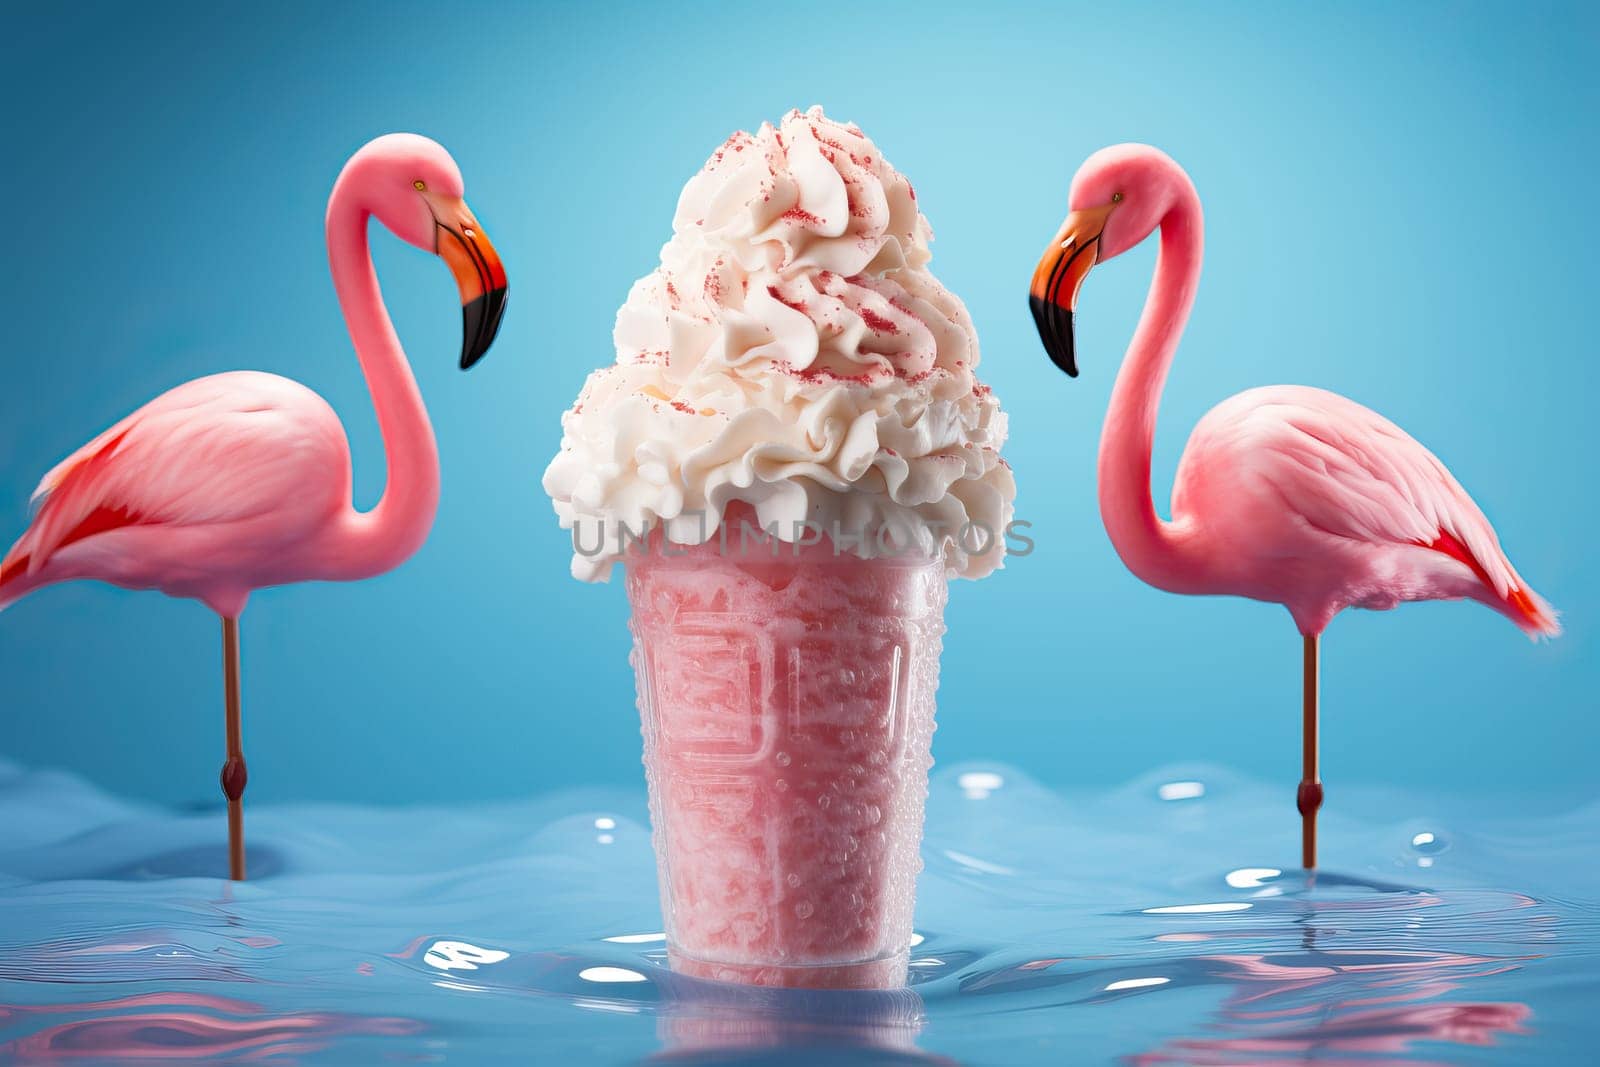 Flamingos and ice cream in the water. by Niko_Cingaryuk